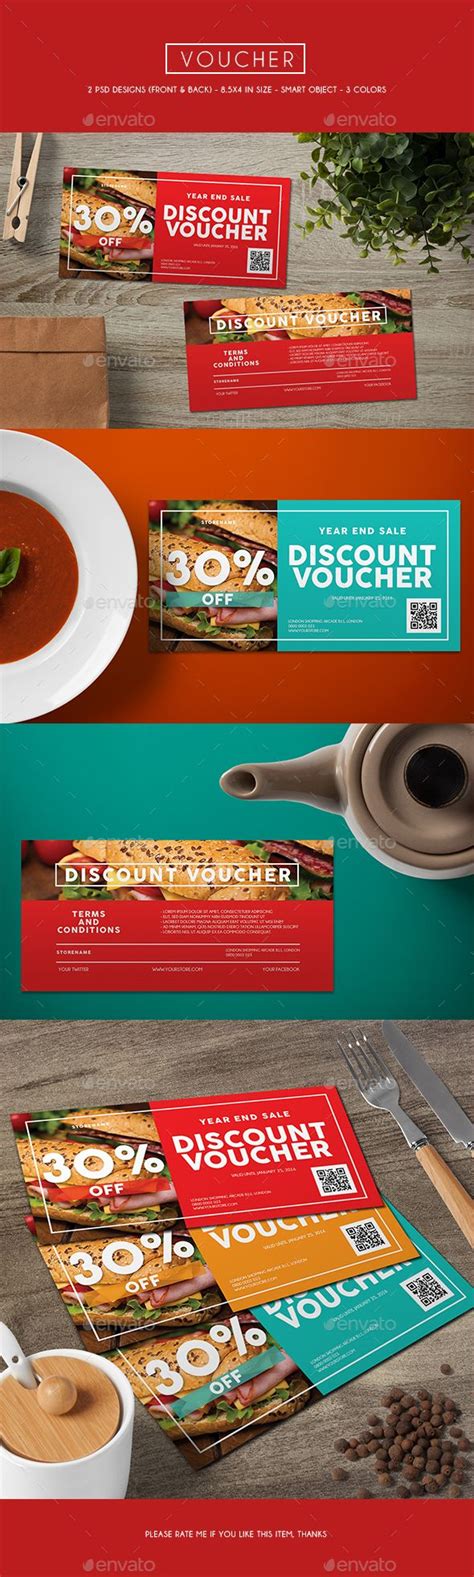 Voucher Card | Voucher design, Food graphic design, Coupon design